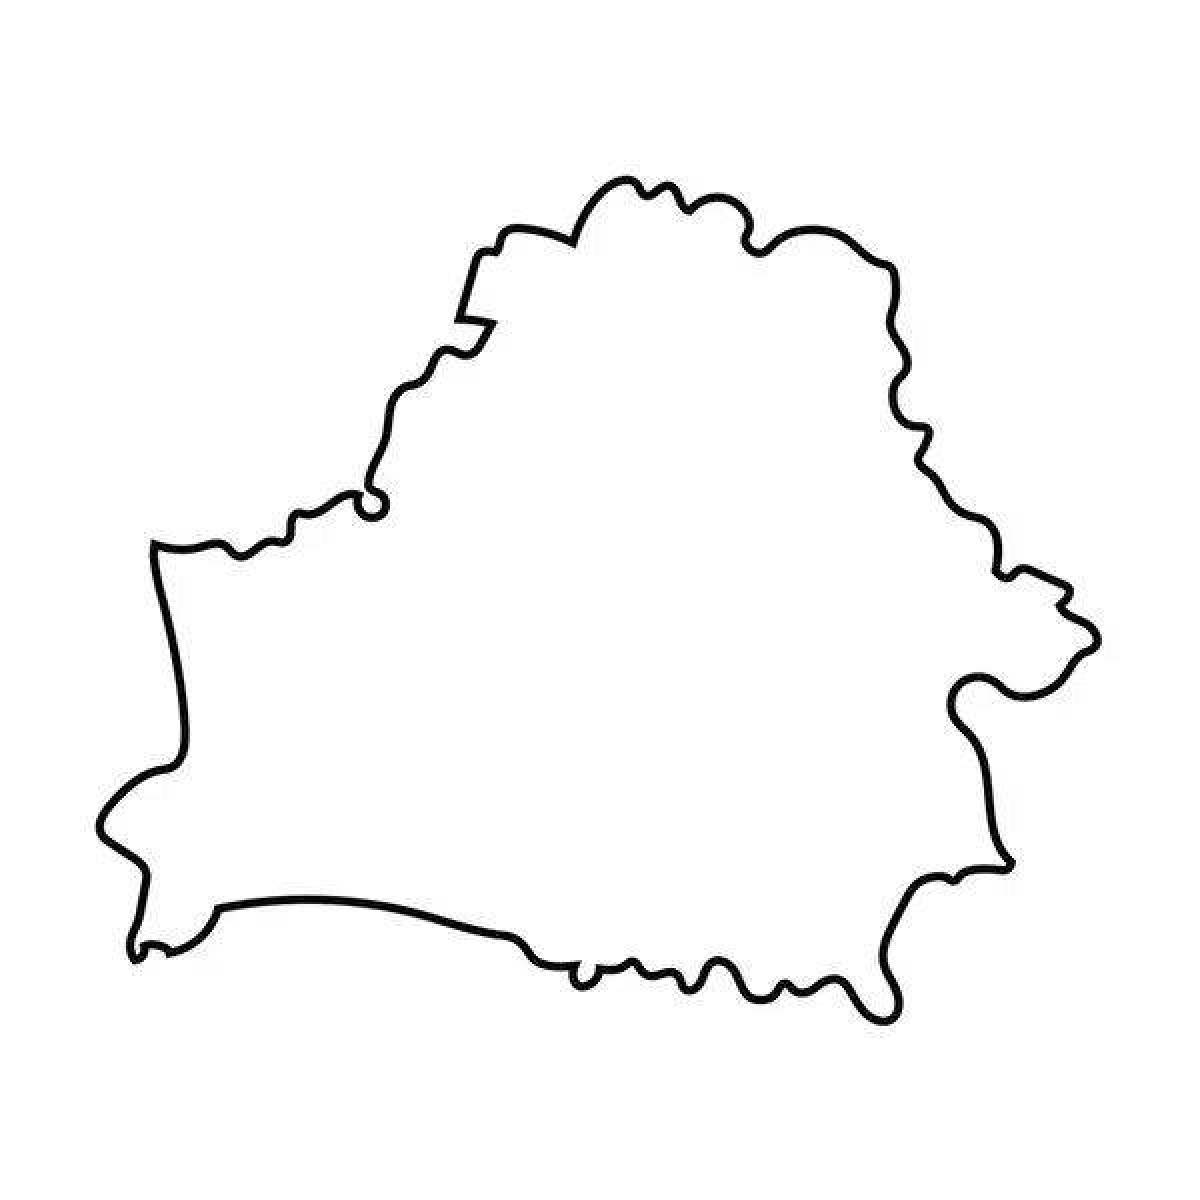 Фото Завораживающая карта беларуси